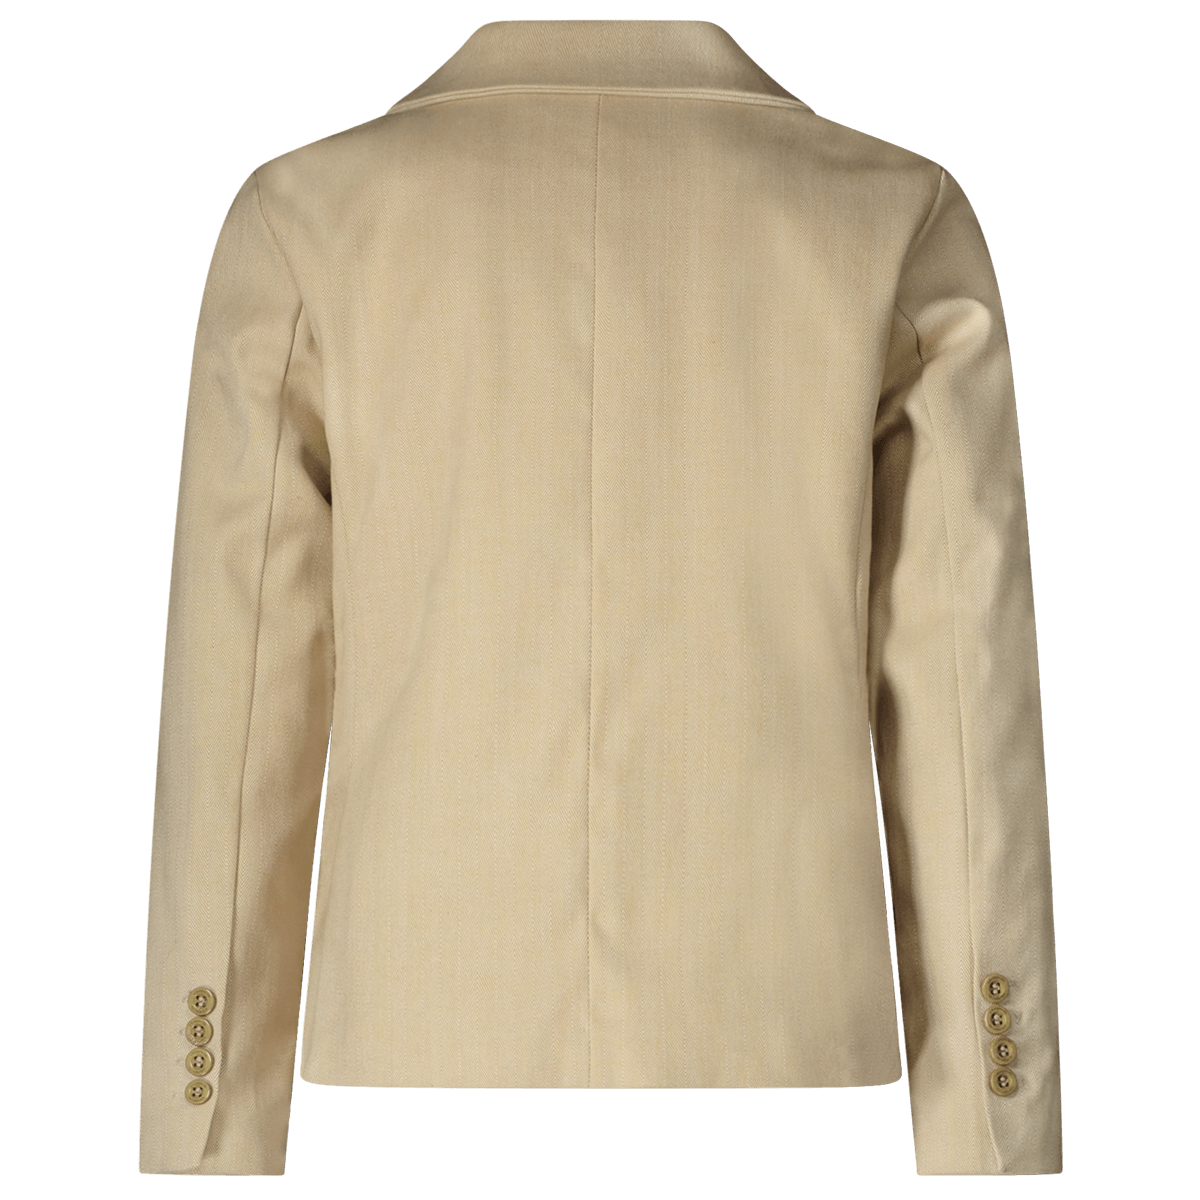 GARÇON herringbone blazer - Le Chic Fashion